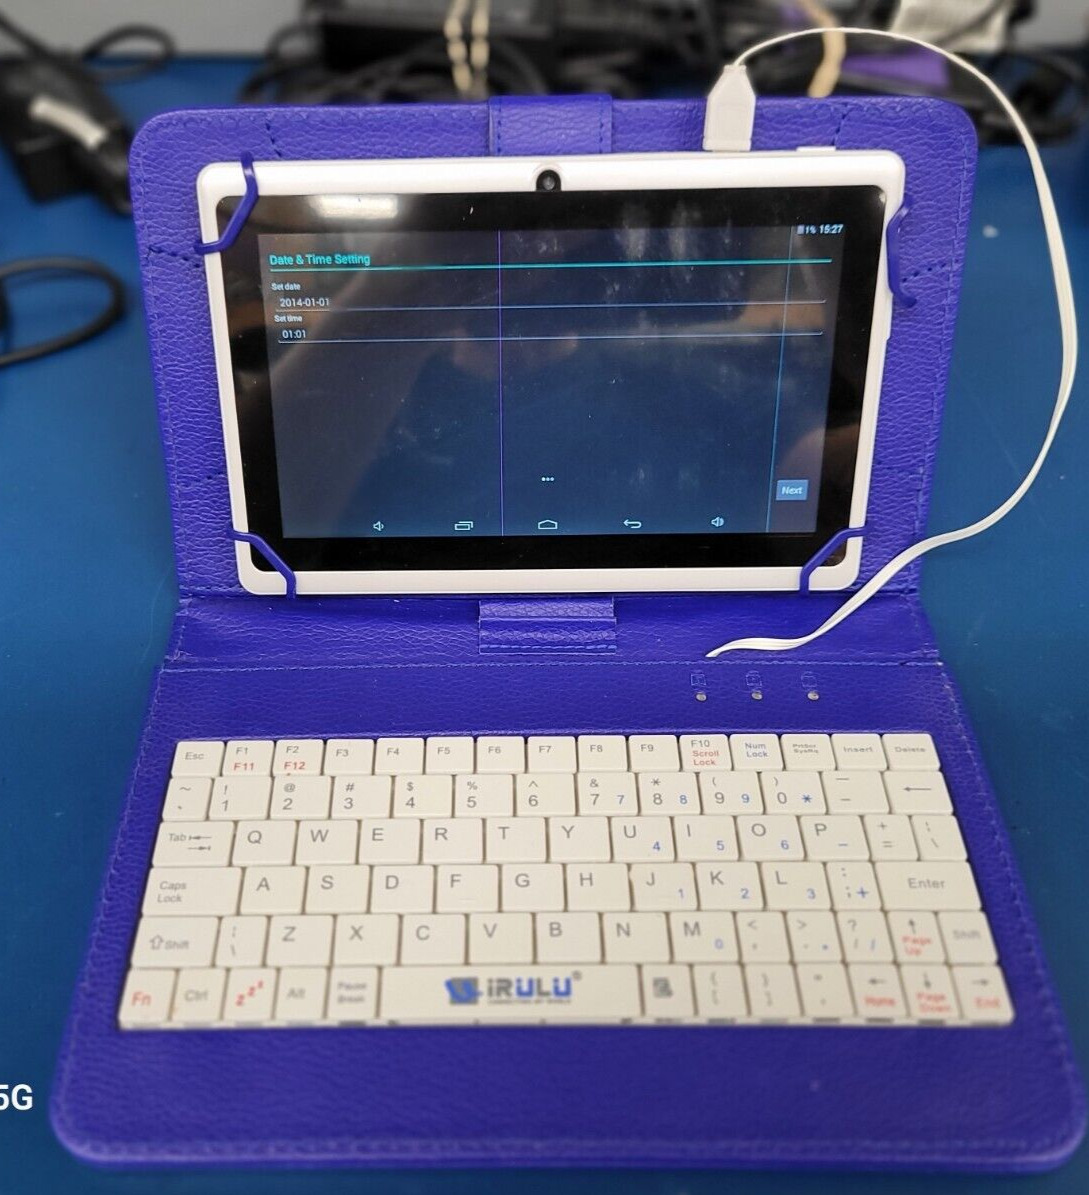 iRULU eXpro Model X7 with Purple Case/Keyboard LCD has 2 lines in it, but Works